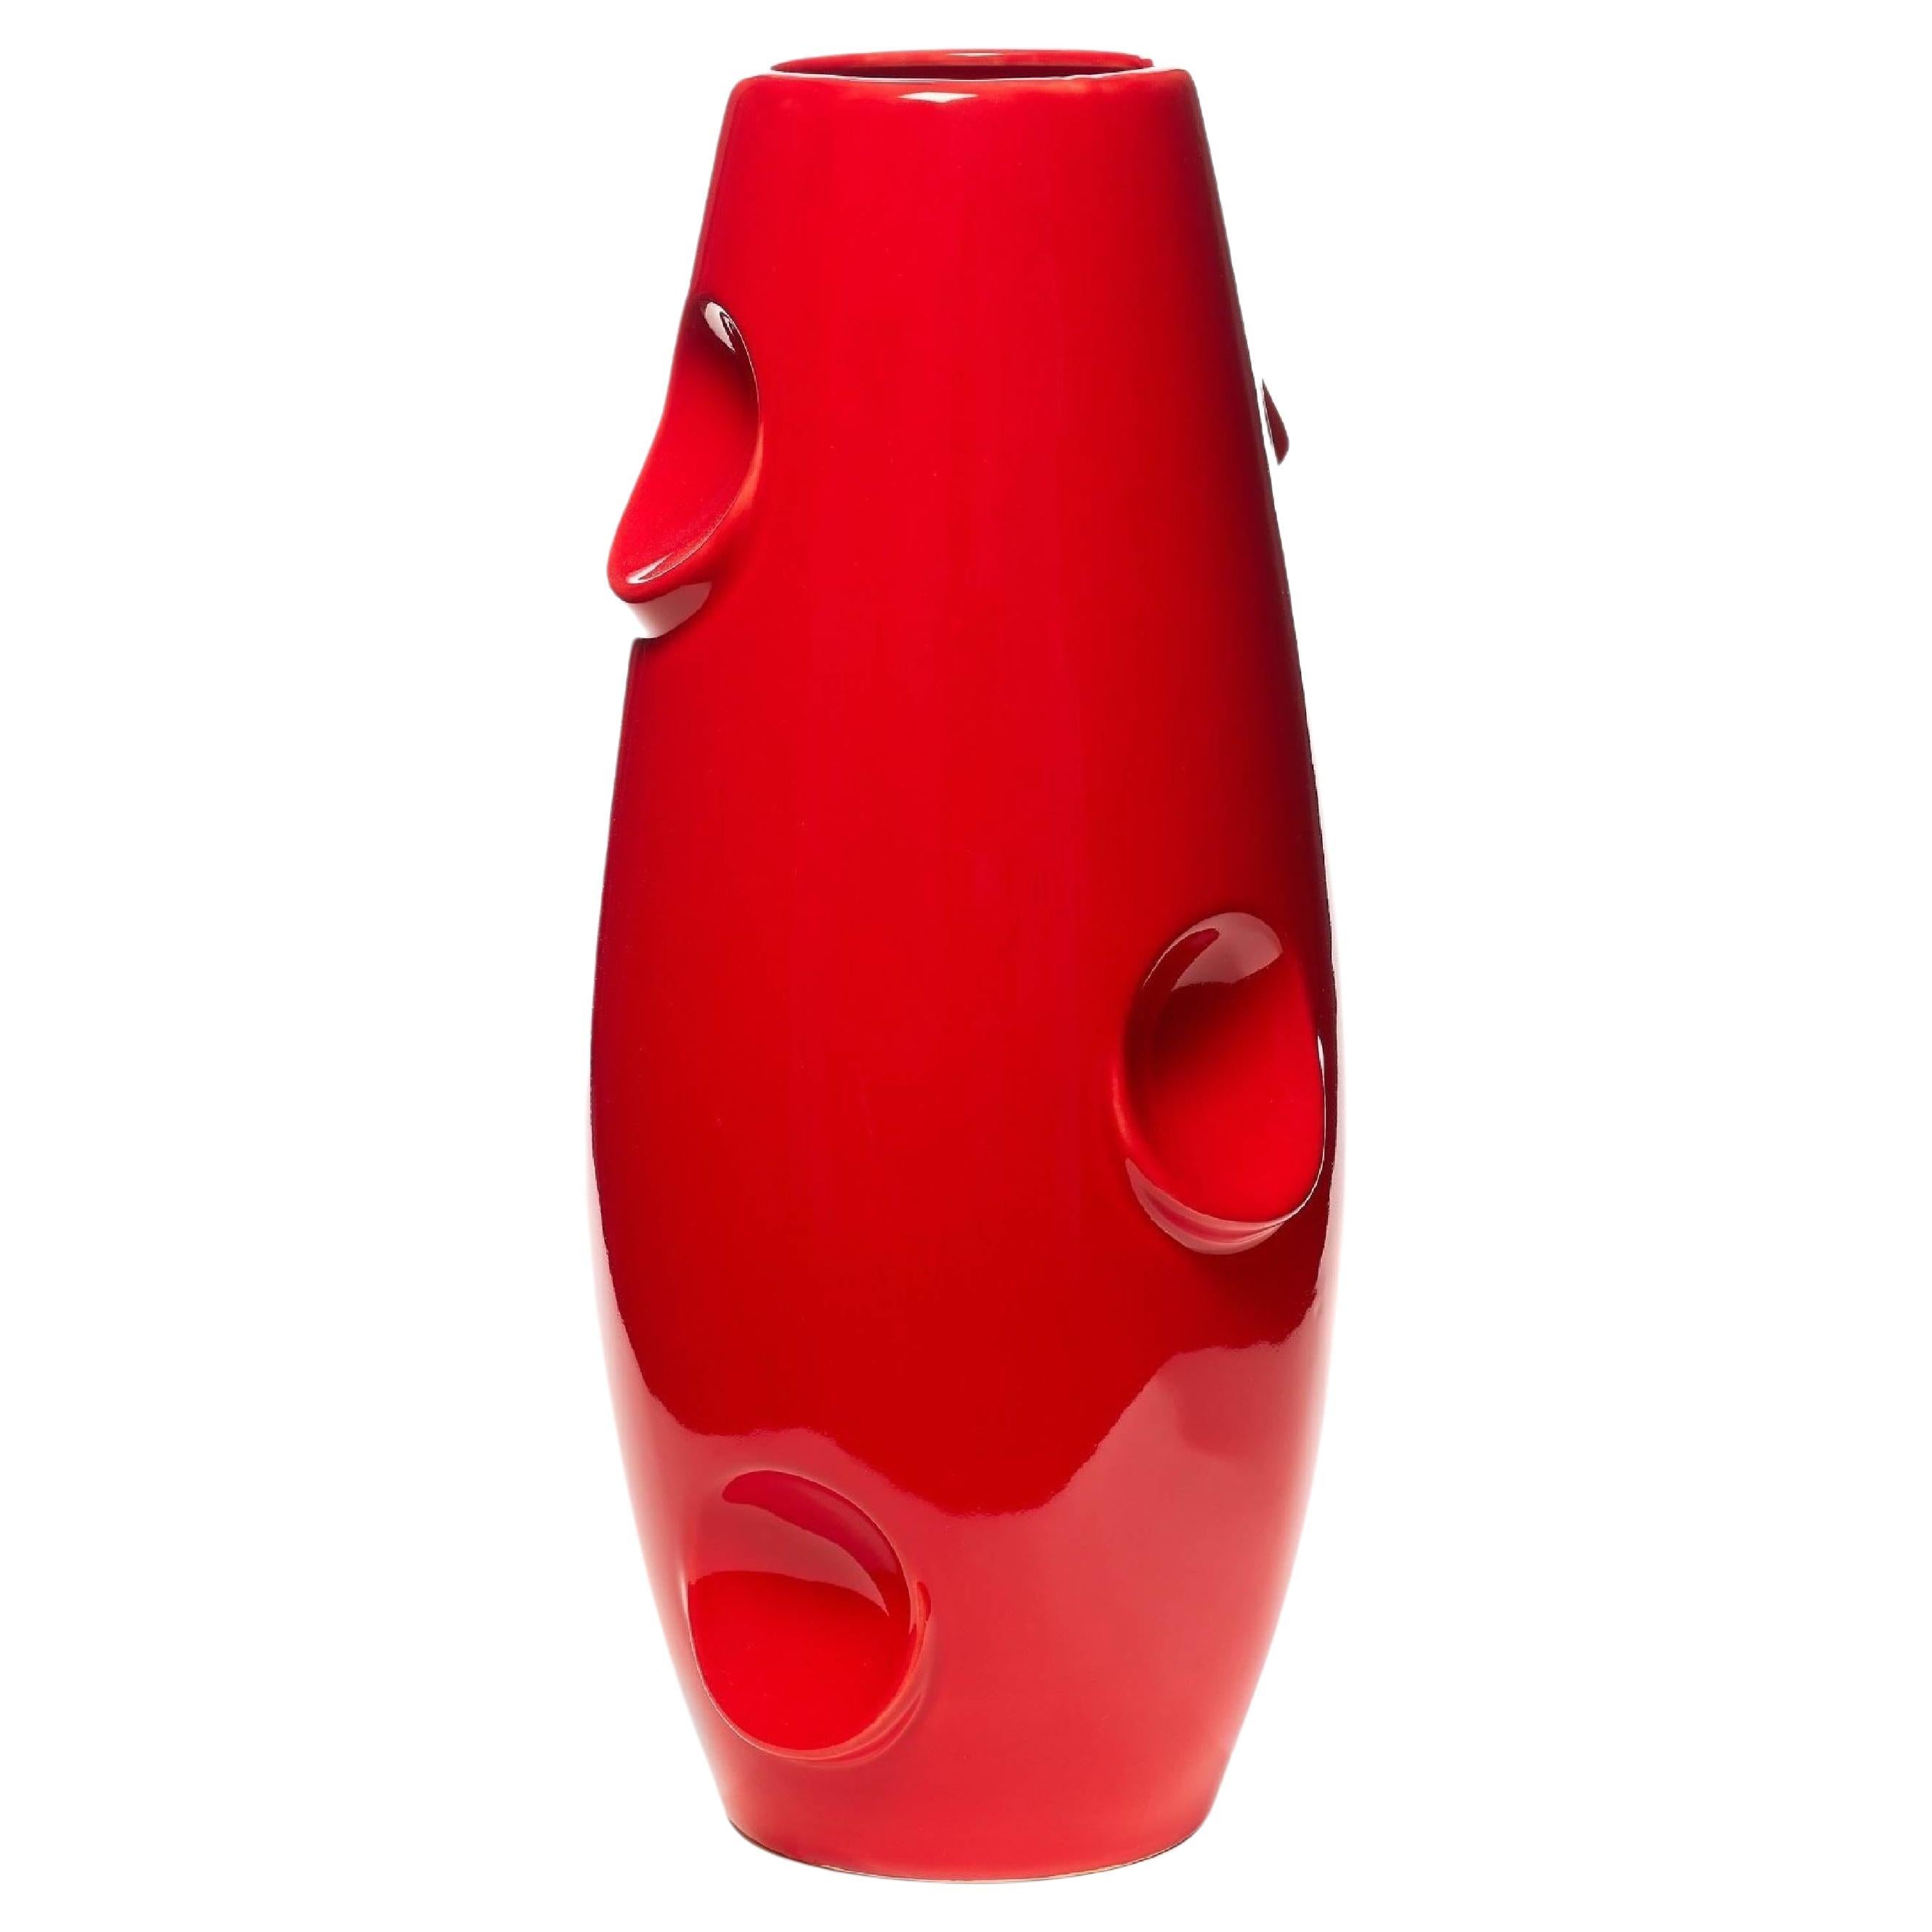 OKO / Red Vase by Malwina Konopacka